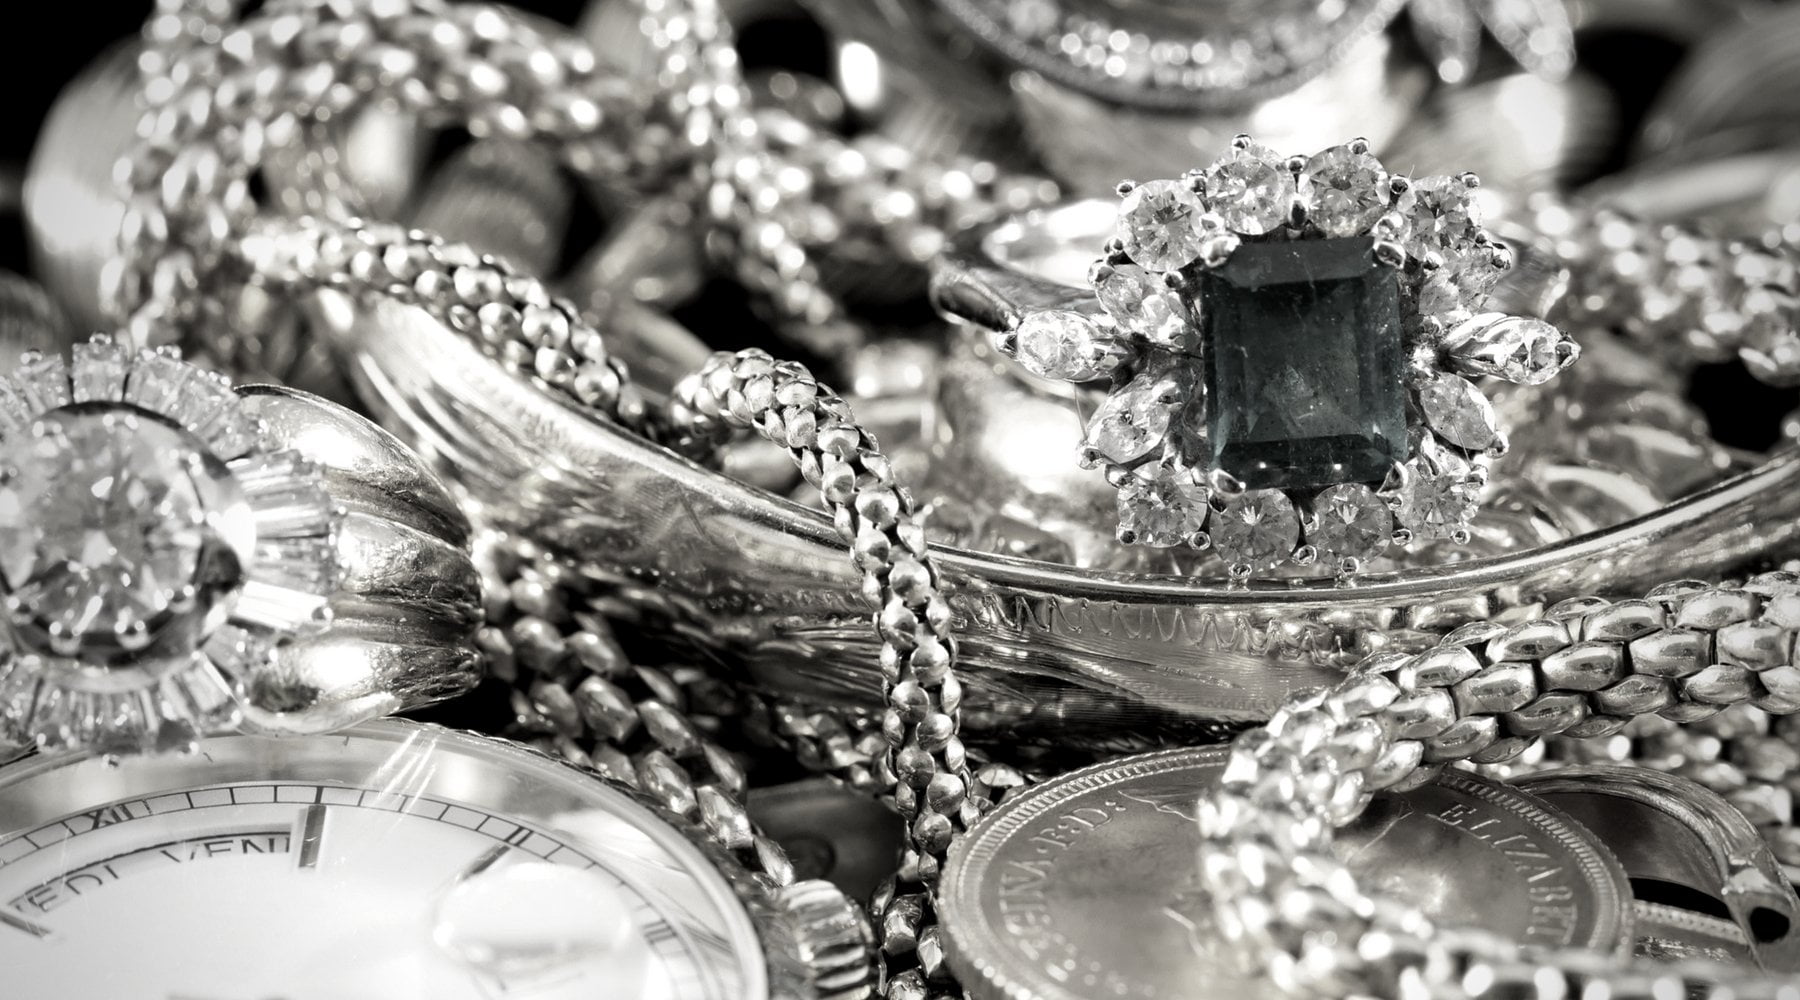 2 Pcs High Luxury Sterling Silver Diamond Rings